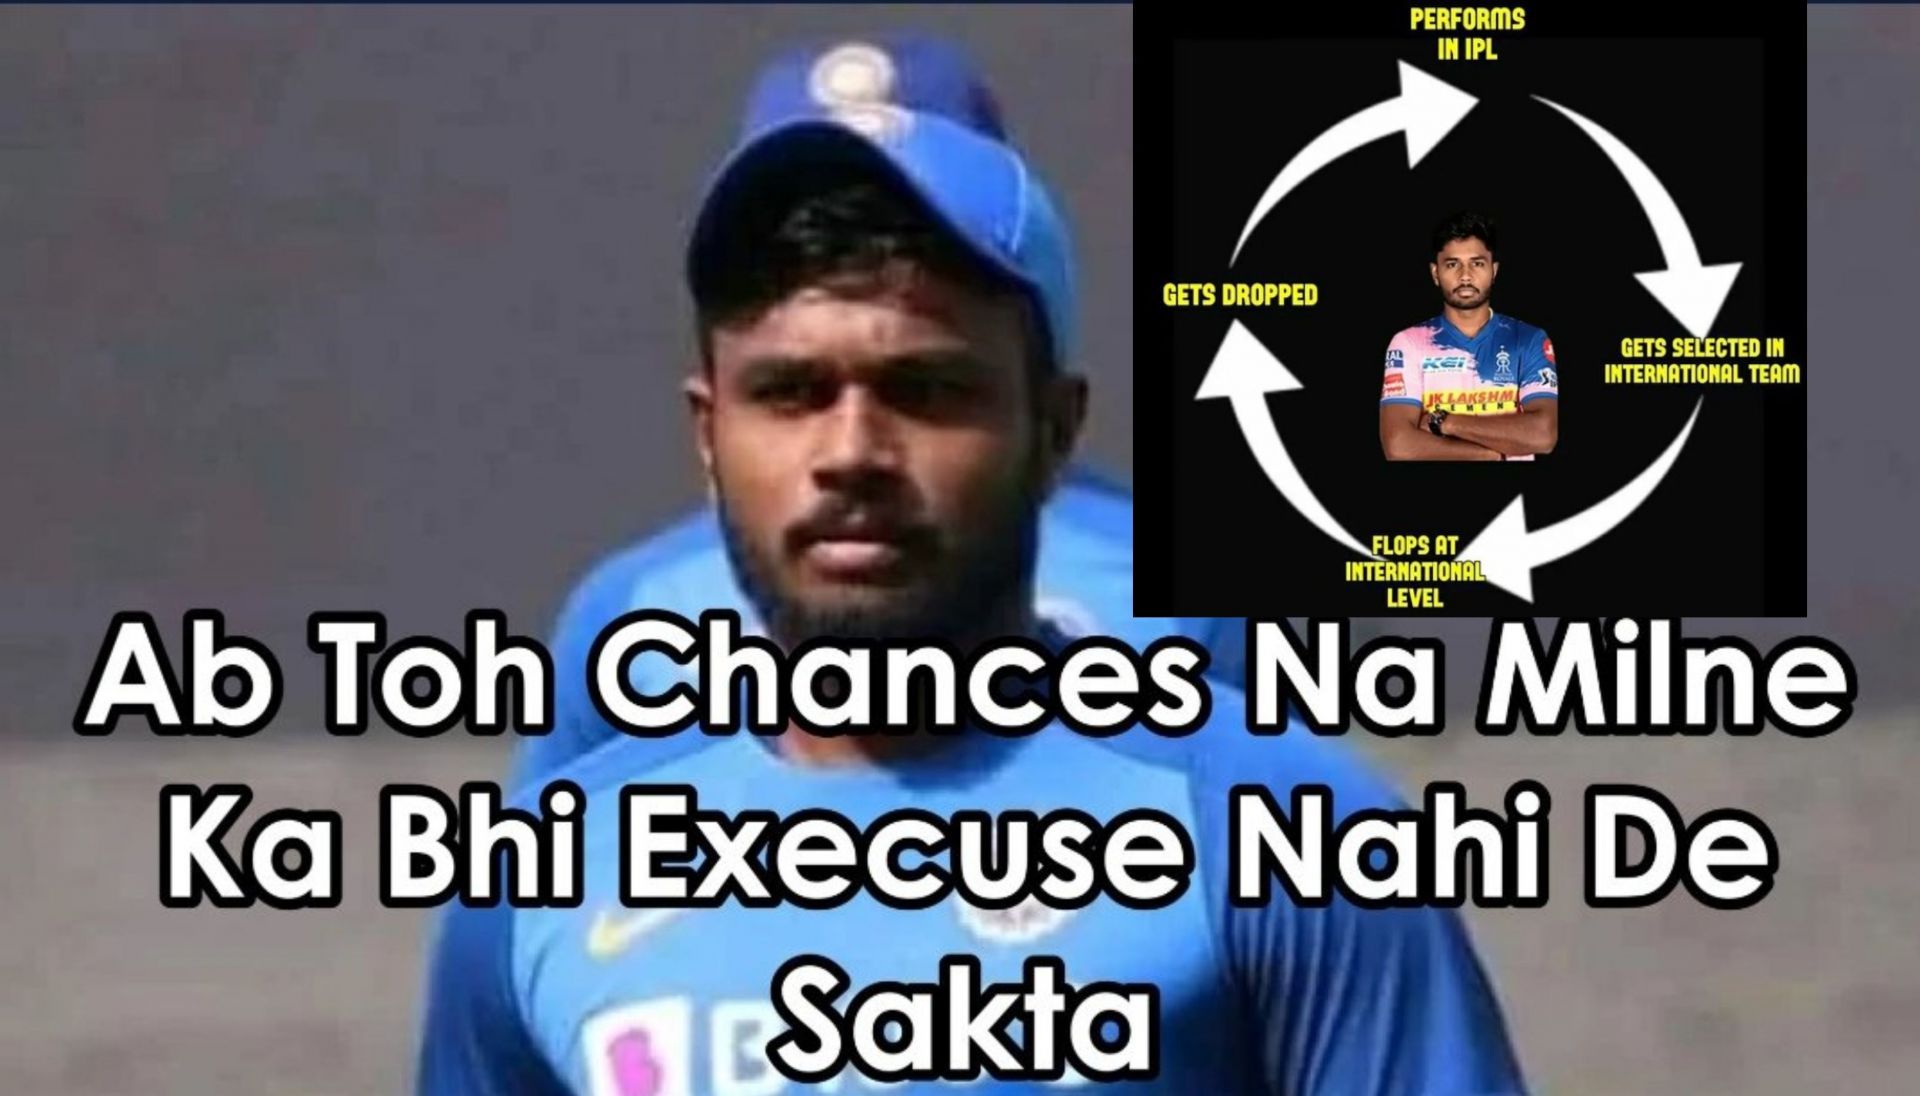 Fans troll Sanju Samson for poor batting performance on Tuesday. 